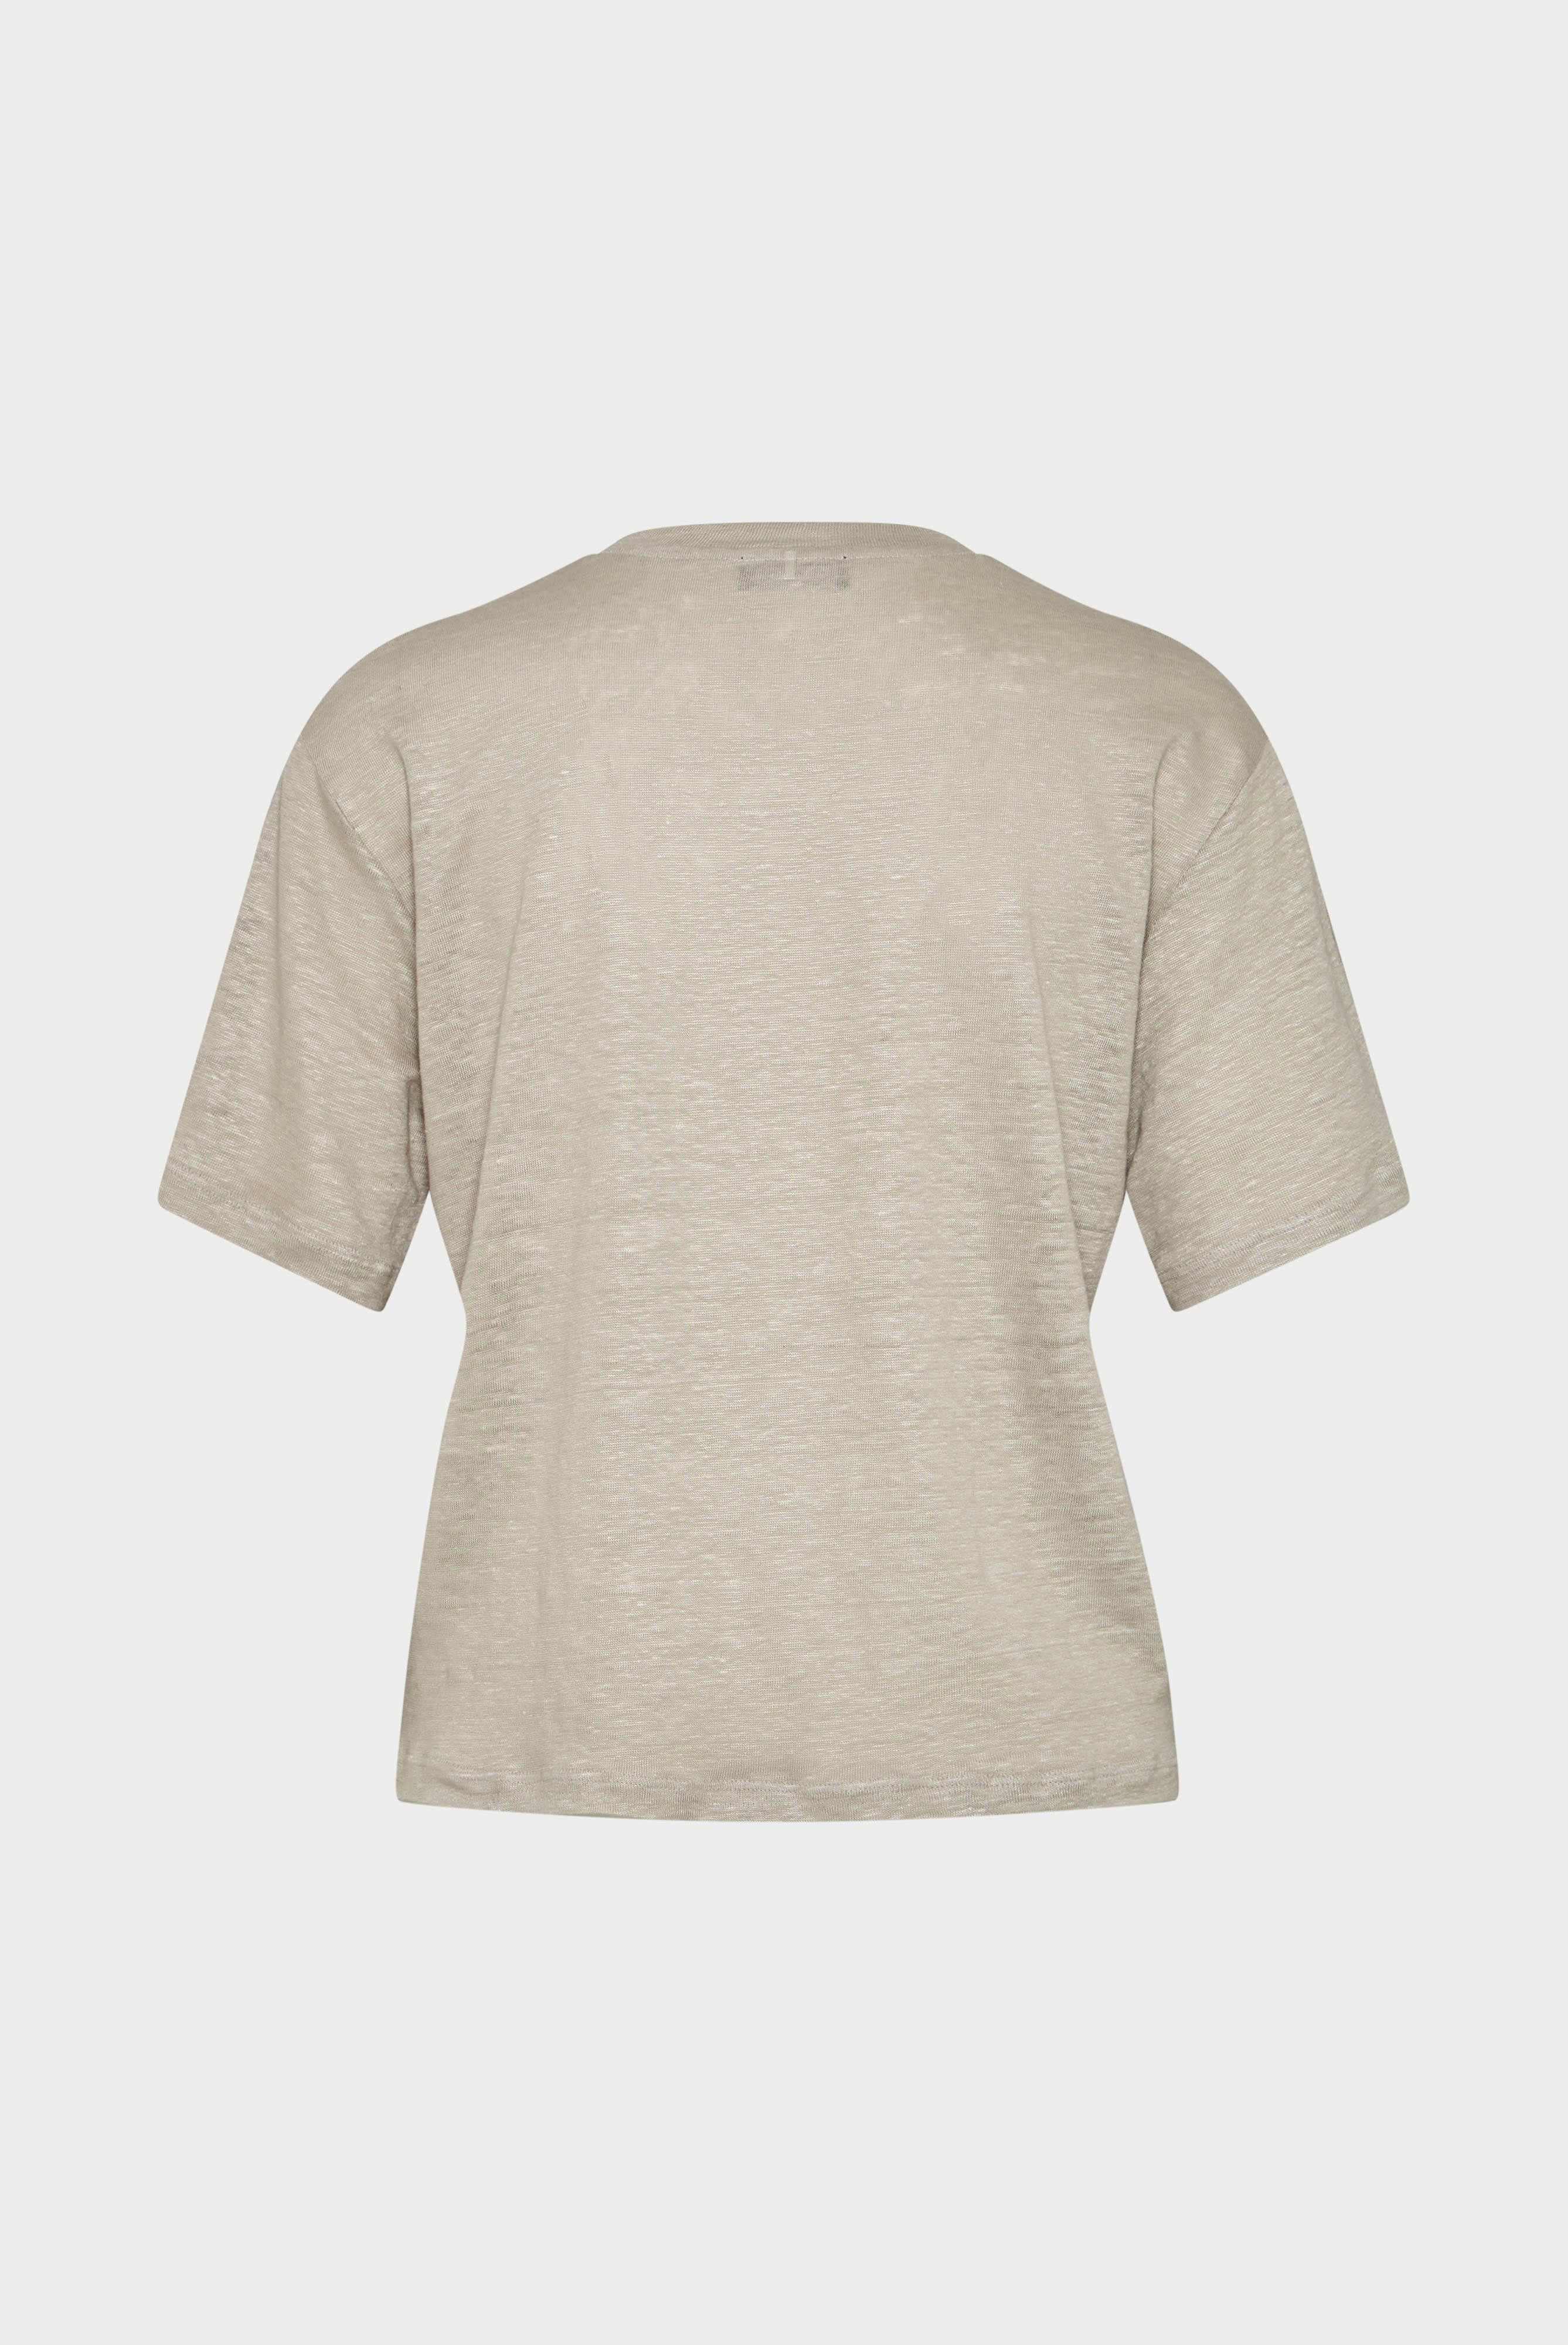 Tops & T-Shirts+Linen Shirt Jersey Boxy Fit+05.2912.Q8.180125.140.40